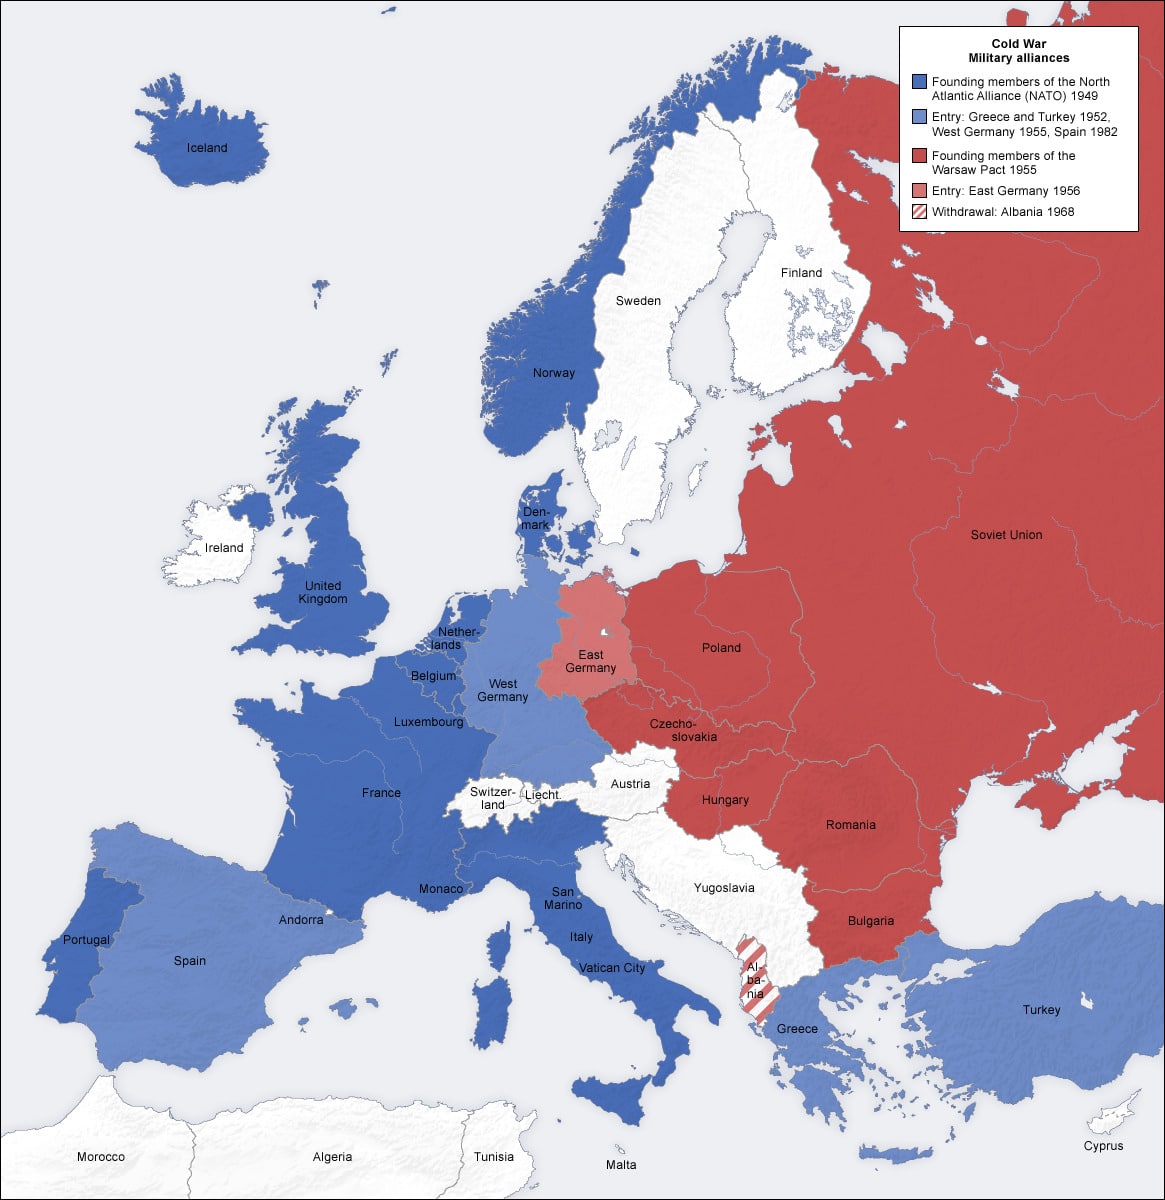 Cold war europe military alliances map. (CC BY-SA 3.0).